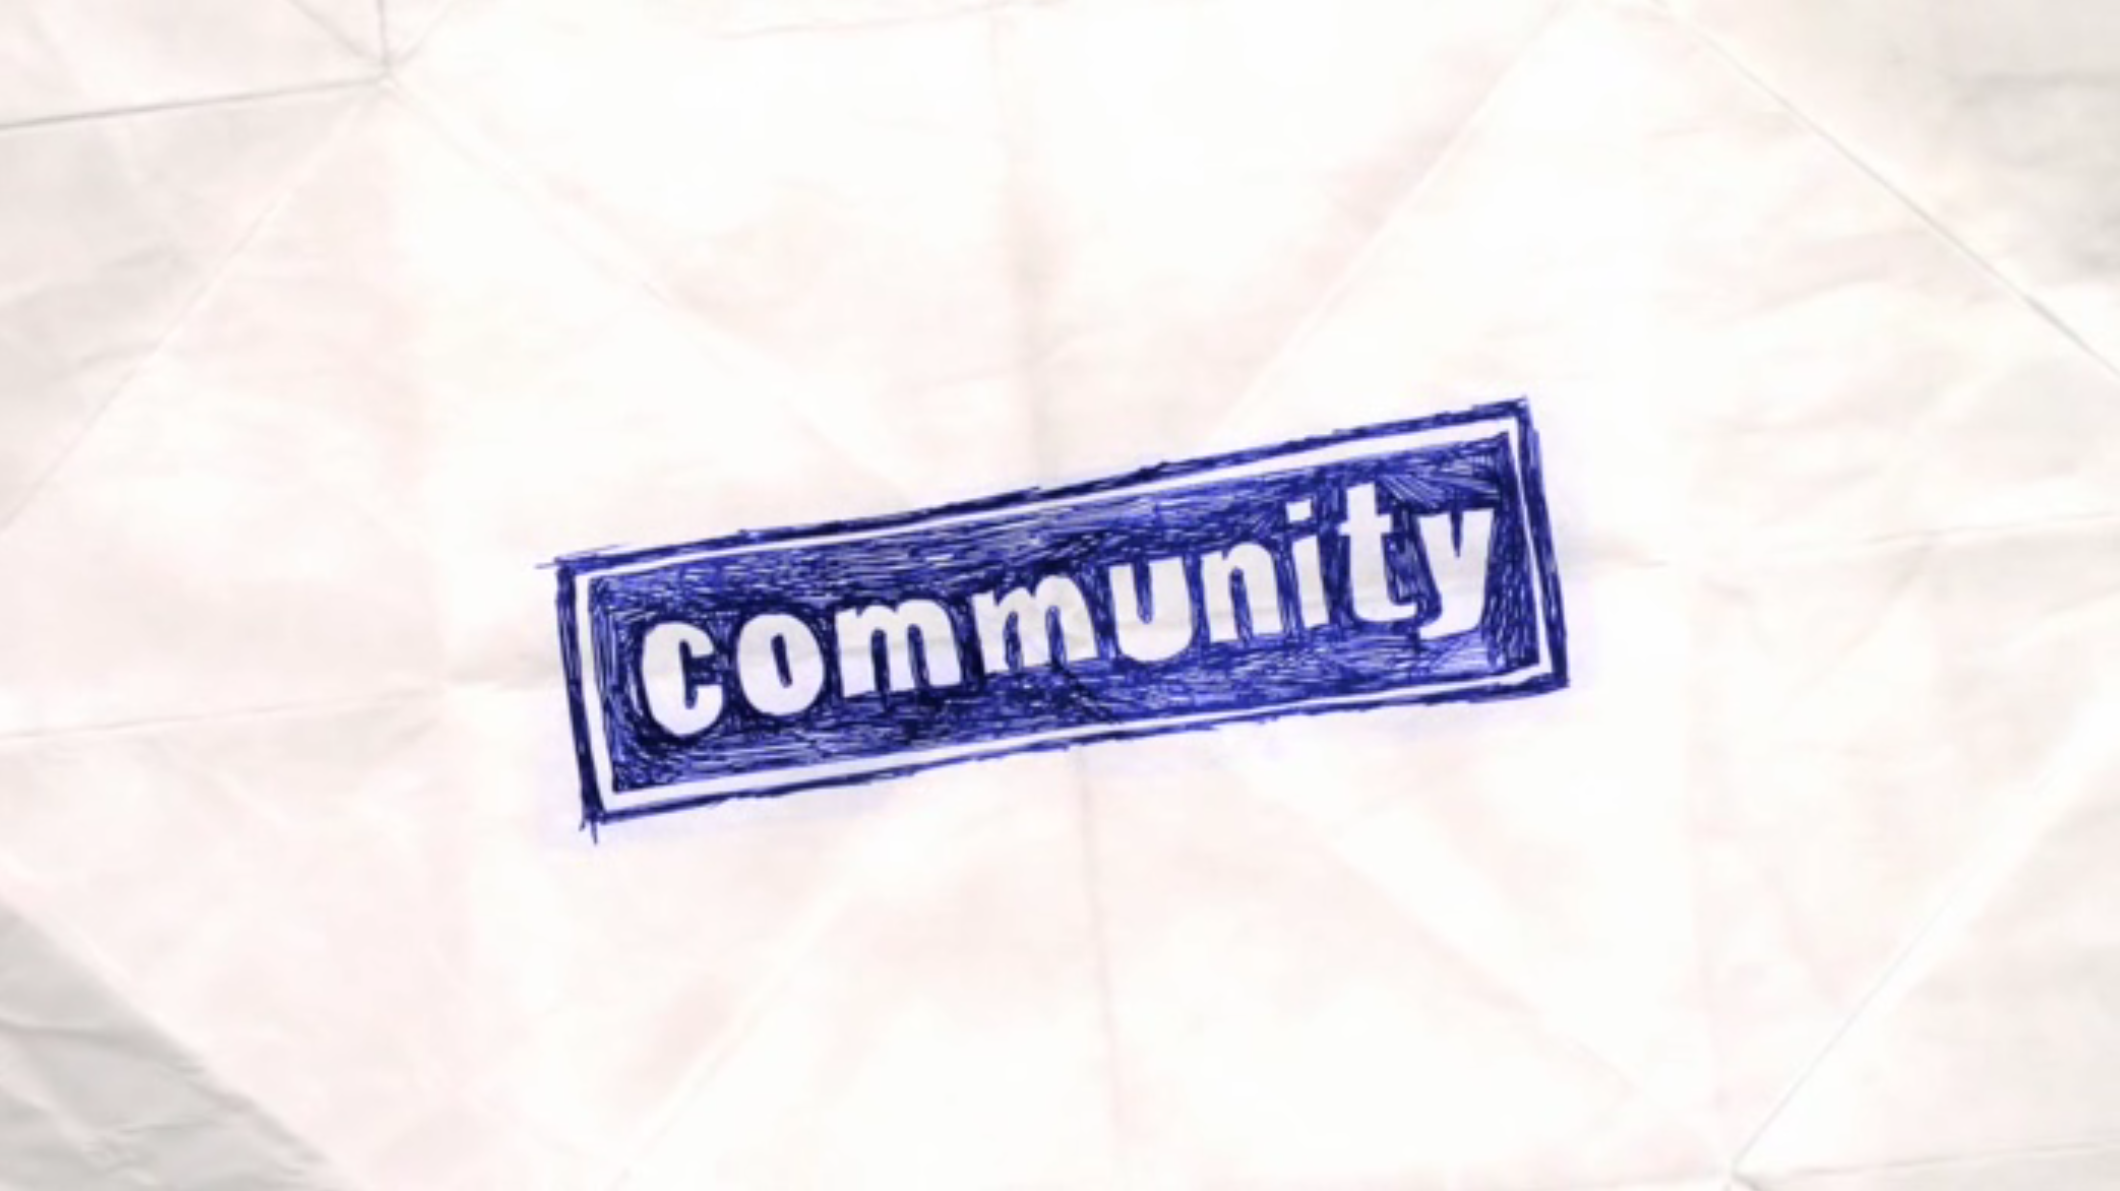 Community also. Комьюнити надпись. Community логотип. Комьюнити сообщество.